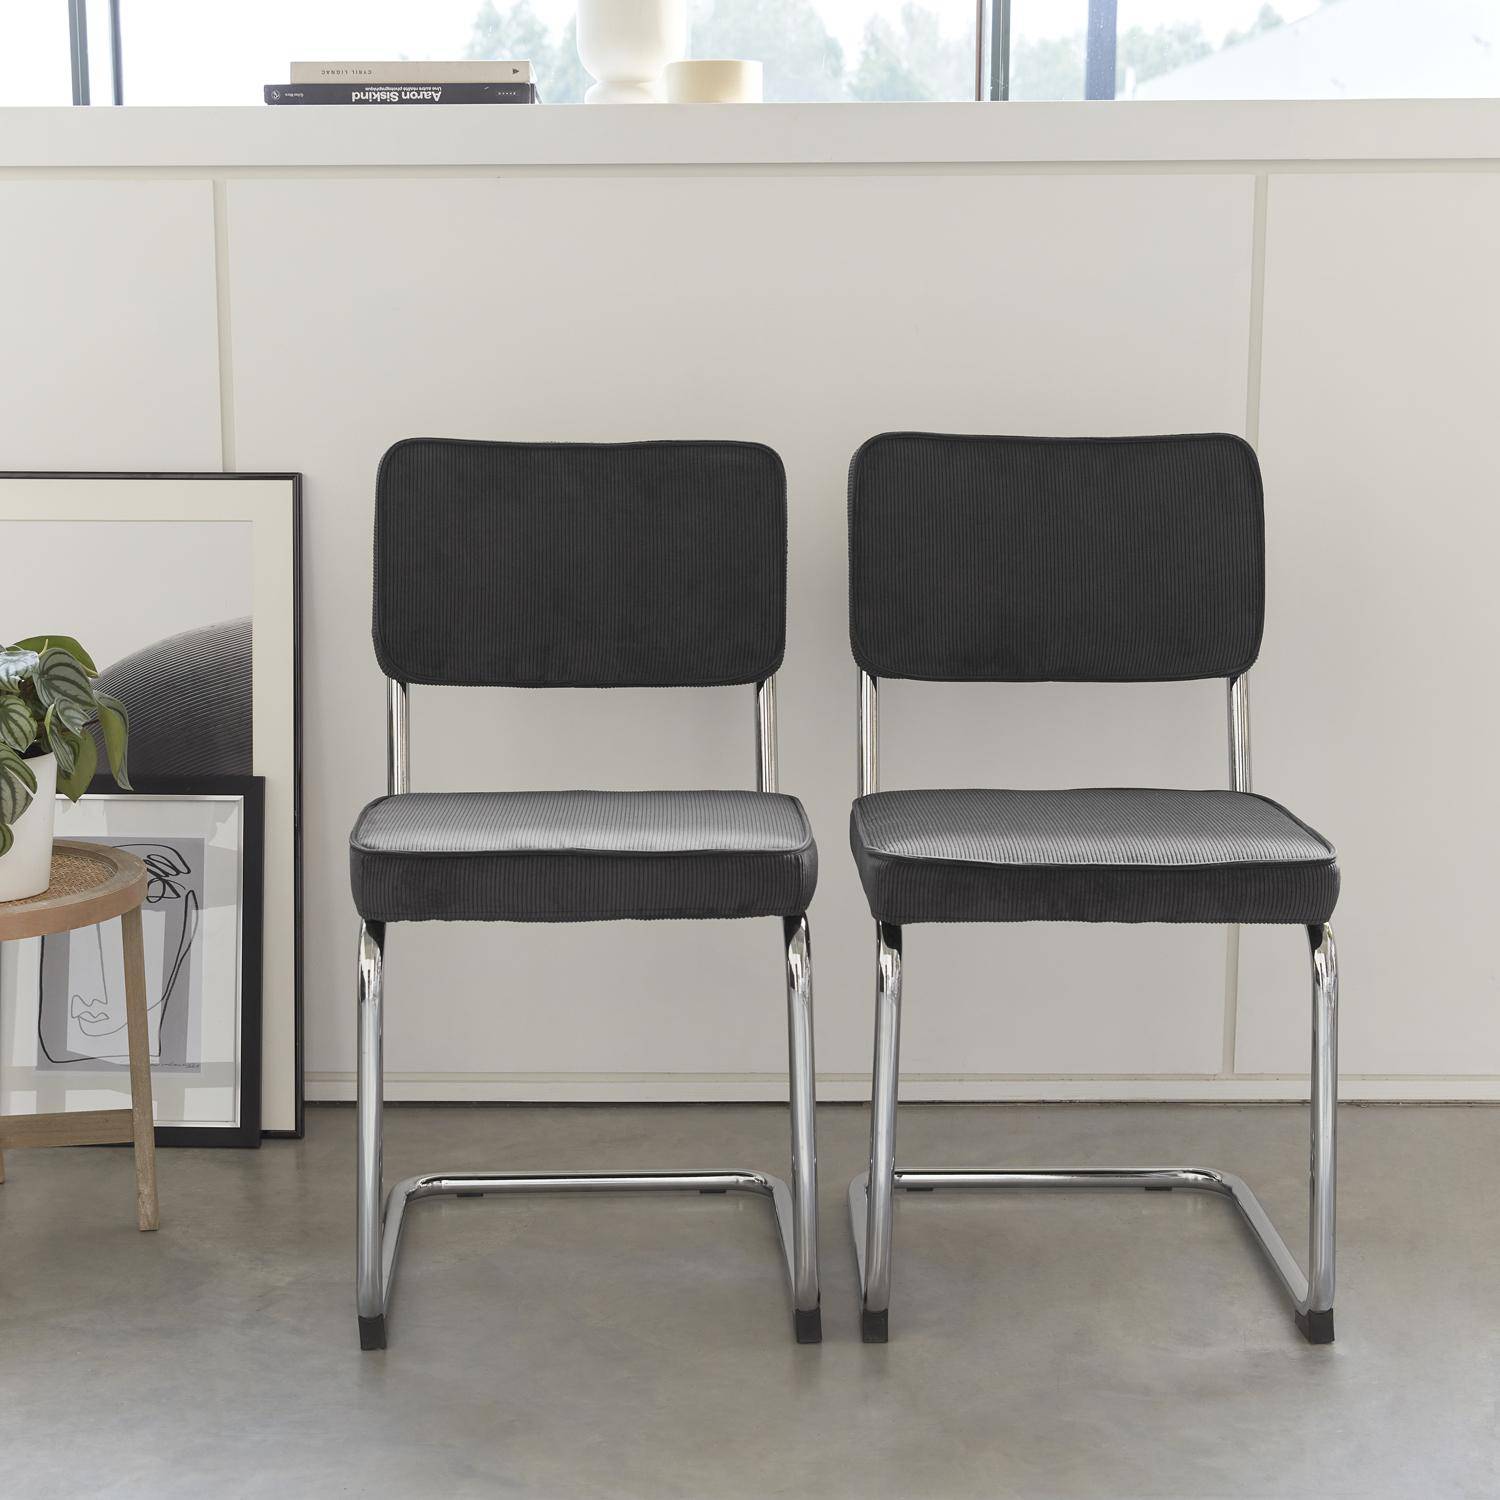 Pair of corduroy cantilever dining chairs, 46x54.5x84.5cm, Maja, Dark Grey,sweeek,Photo1